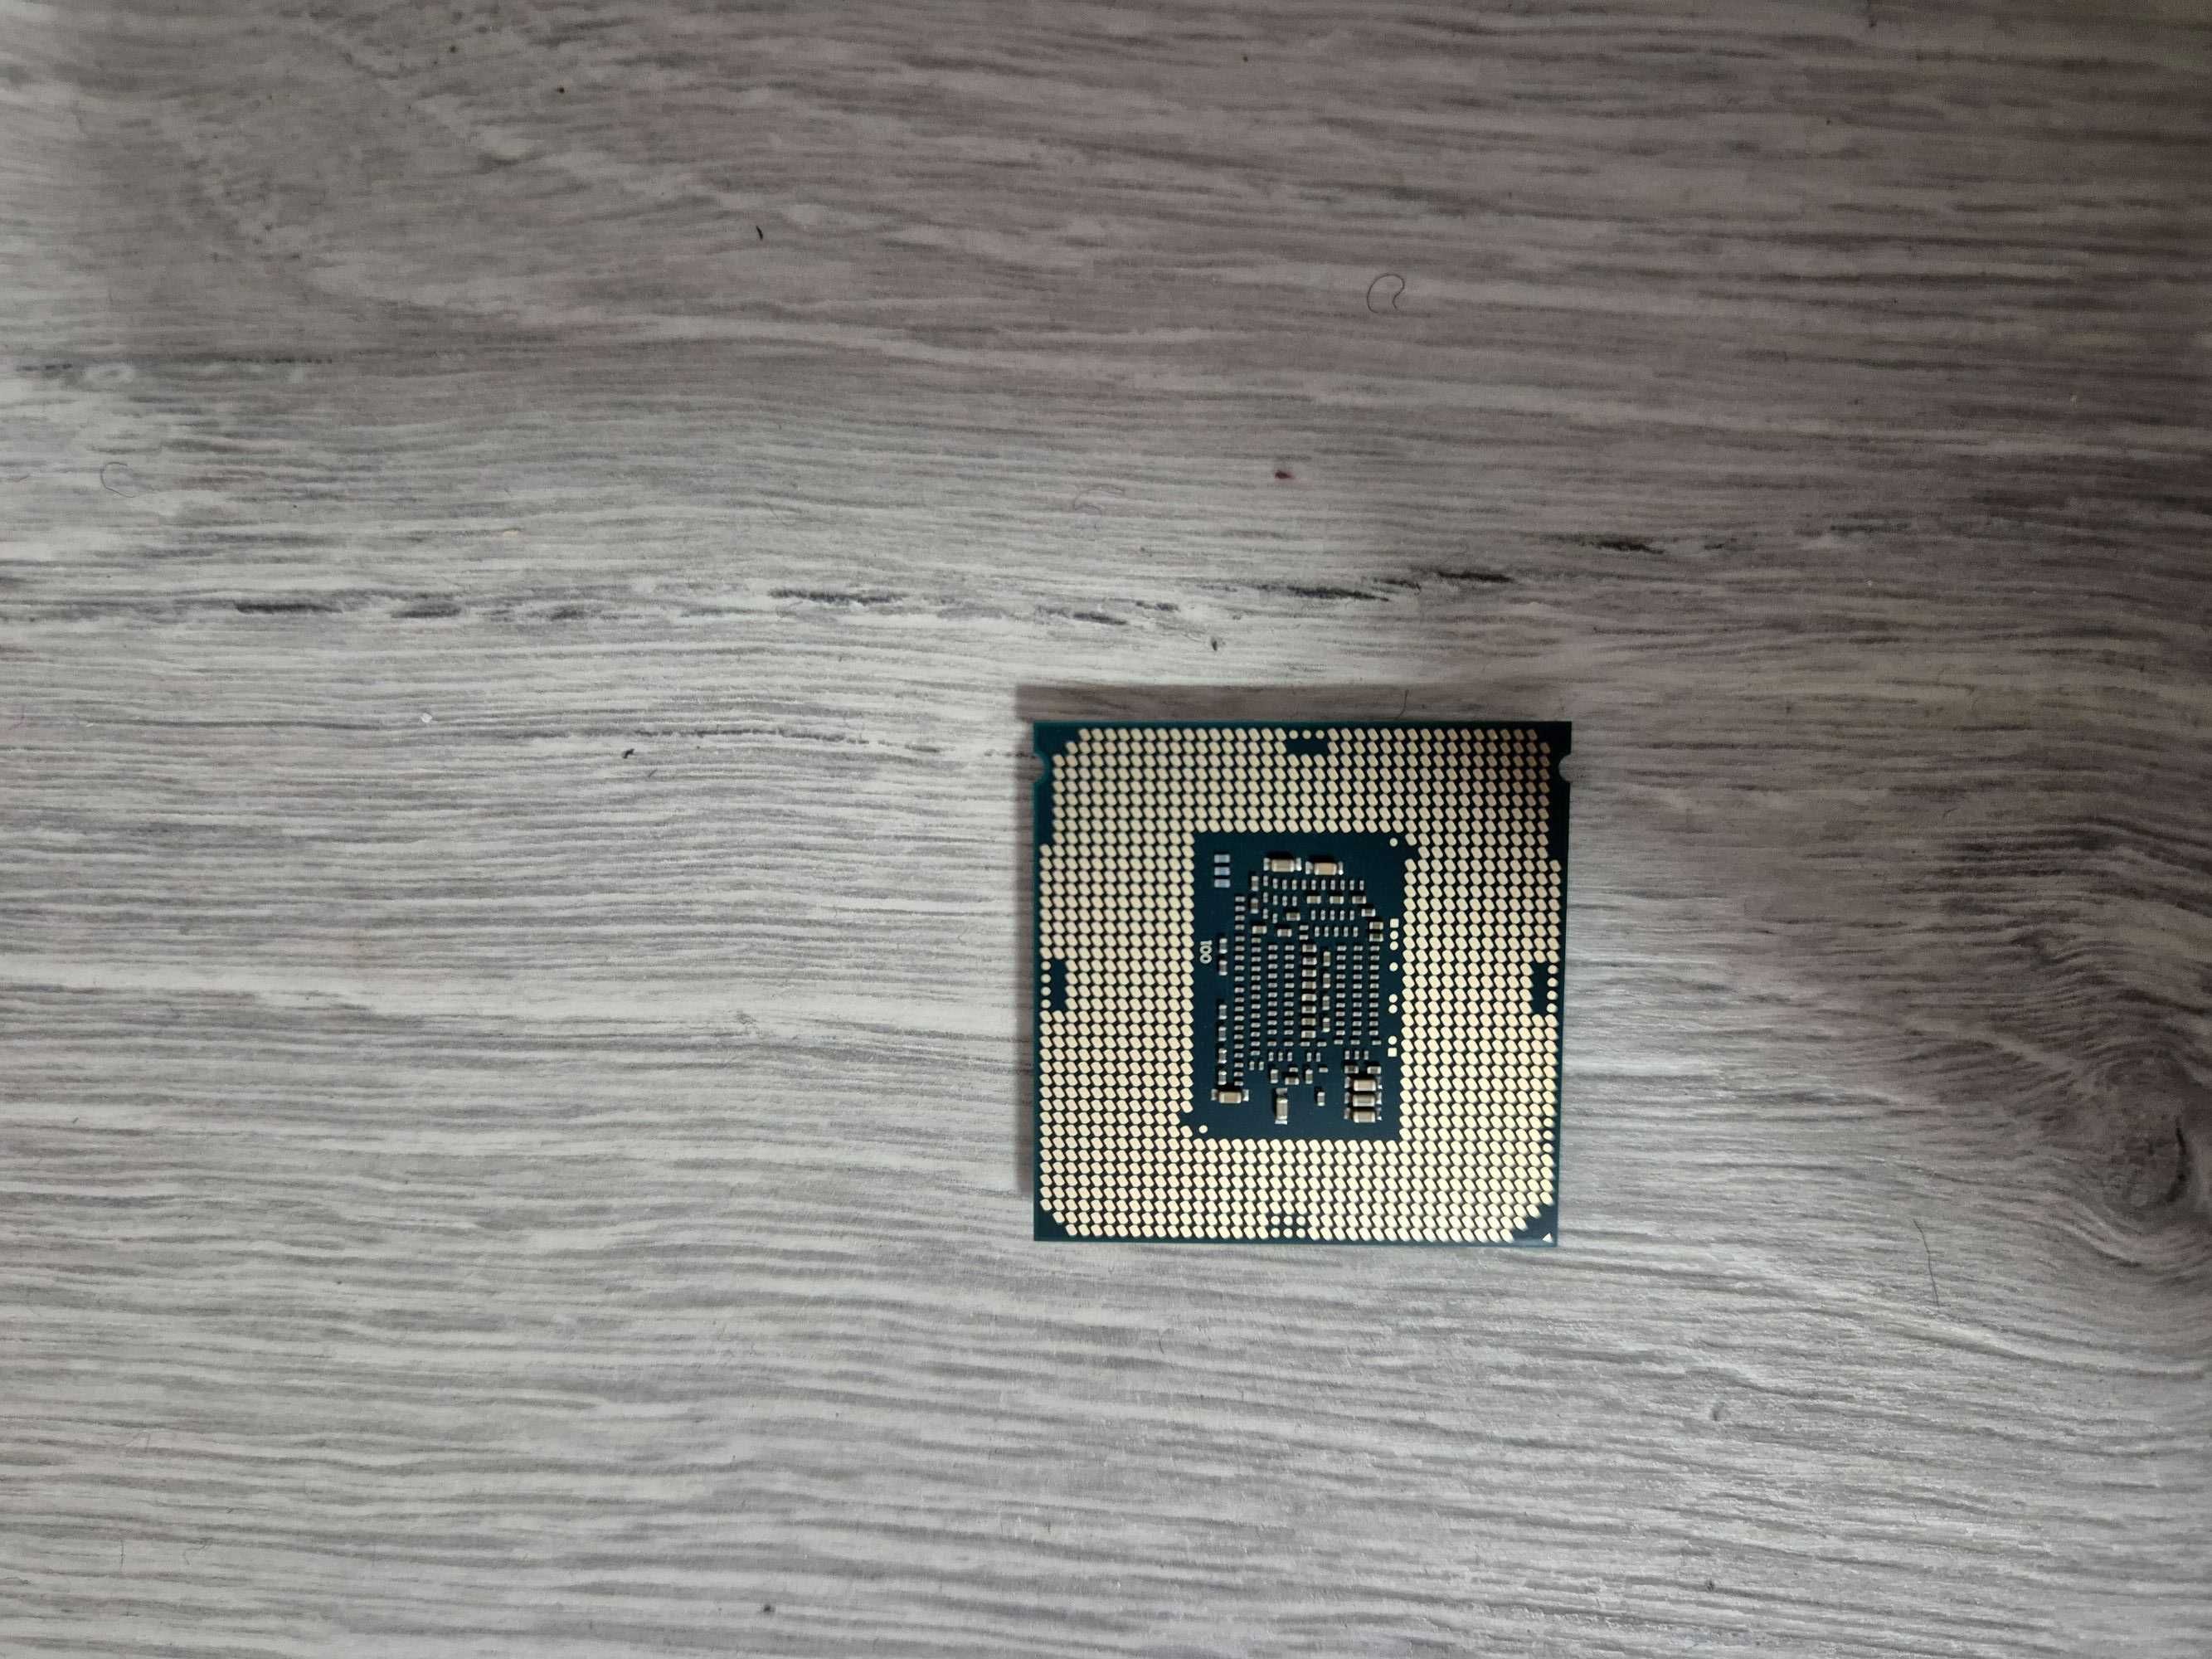 s1151 сет Intel Core i5-6600K з графікою+мама MSI Z170-A PRO. Trade-in